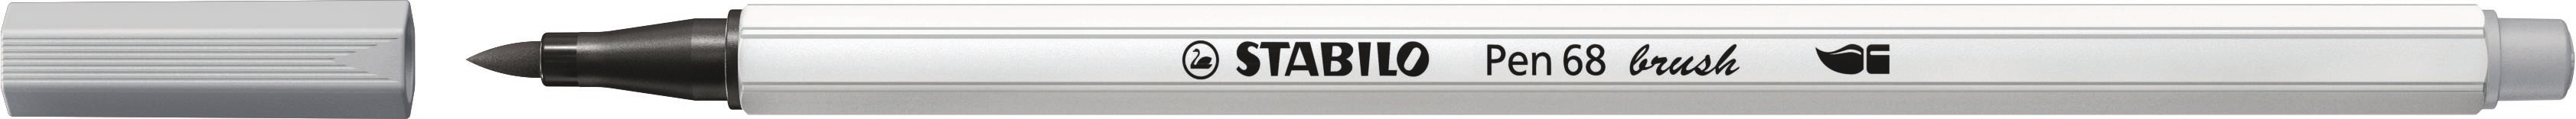 STABILO Stylo Fibre 68 brush 568/95 gris clair